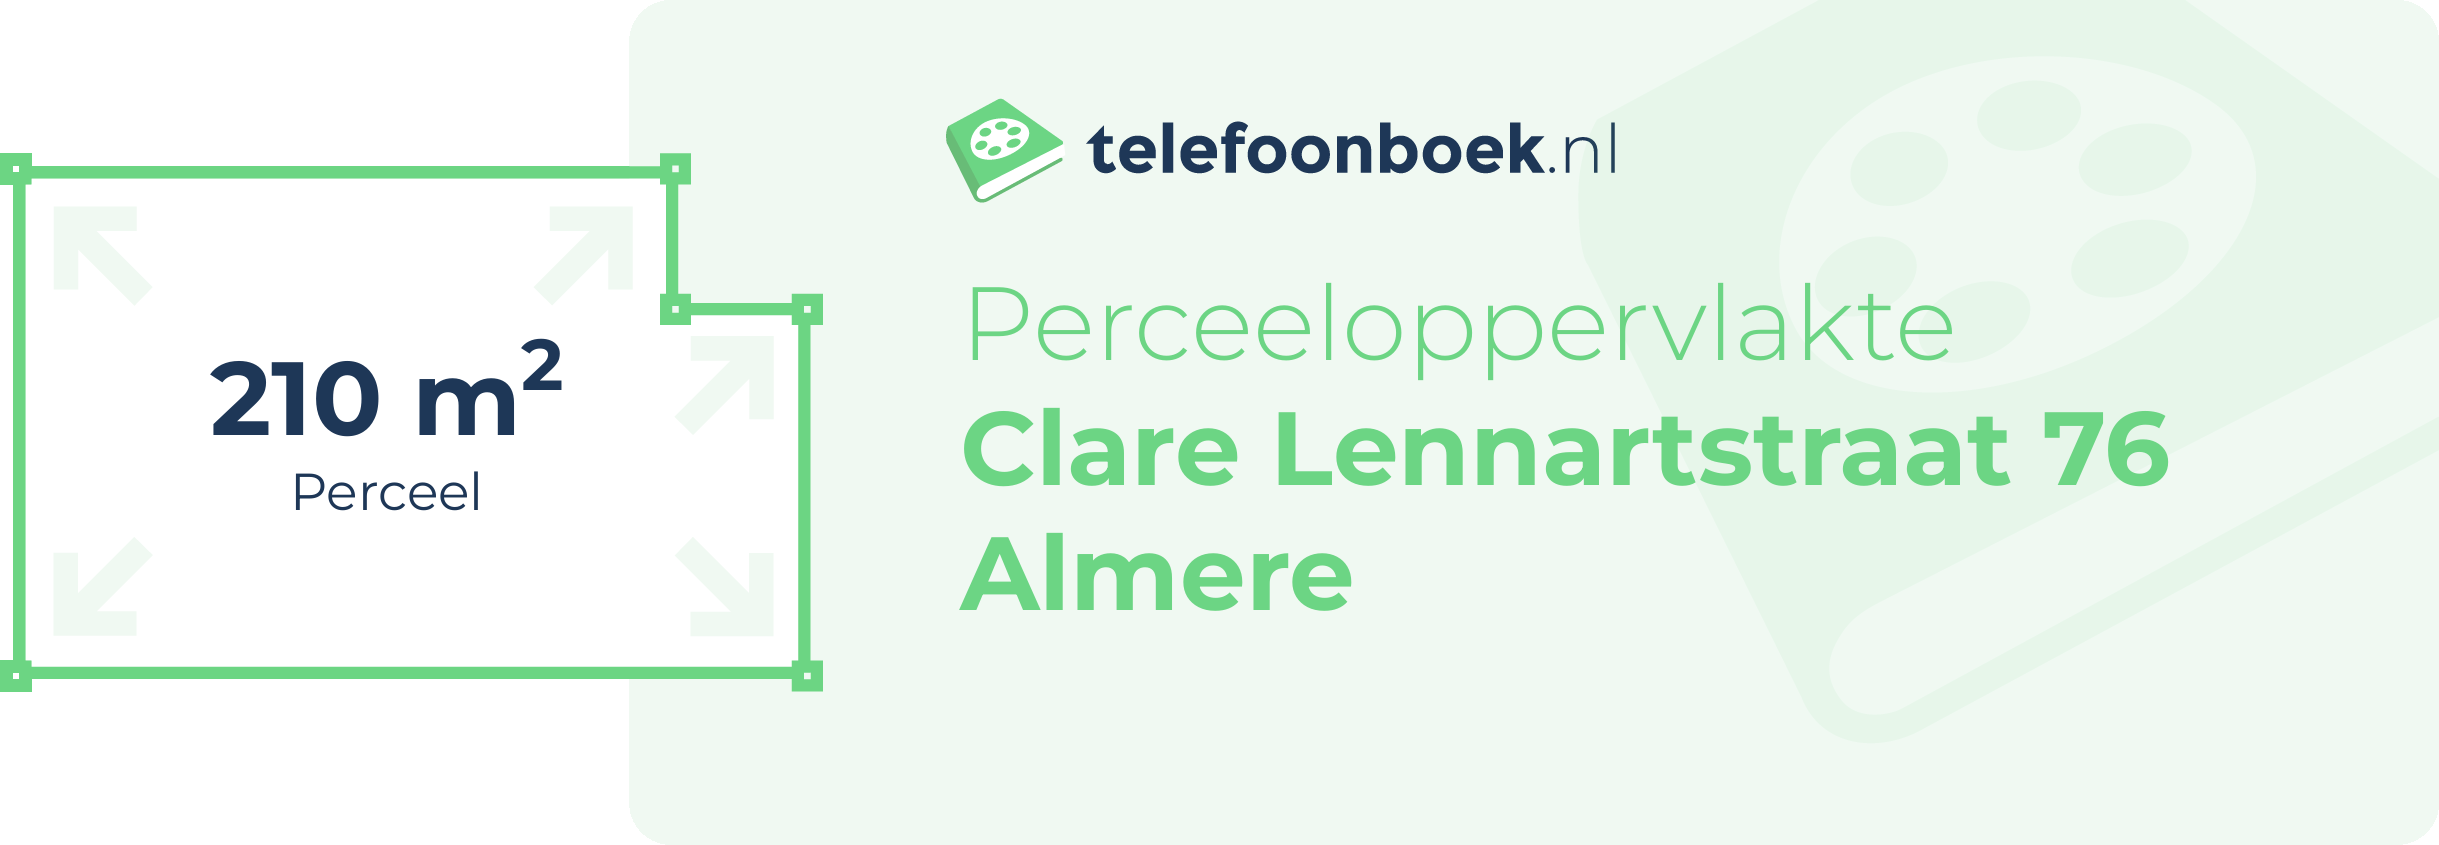 Perceeloppervlakte Clare Lennartstraat 76 Almere